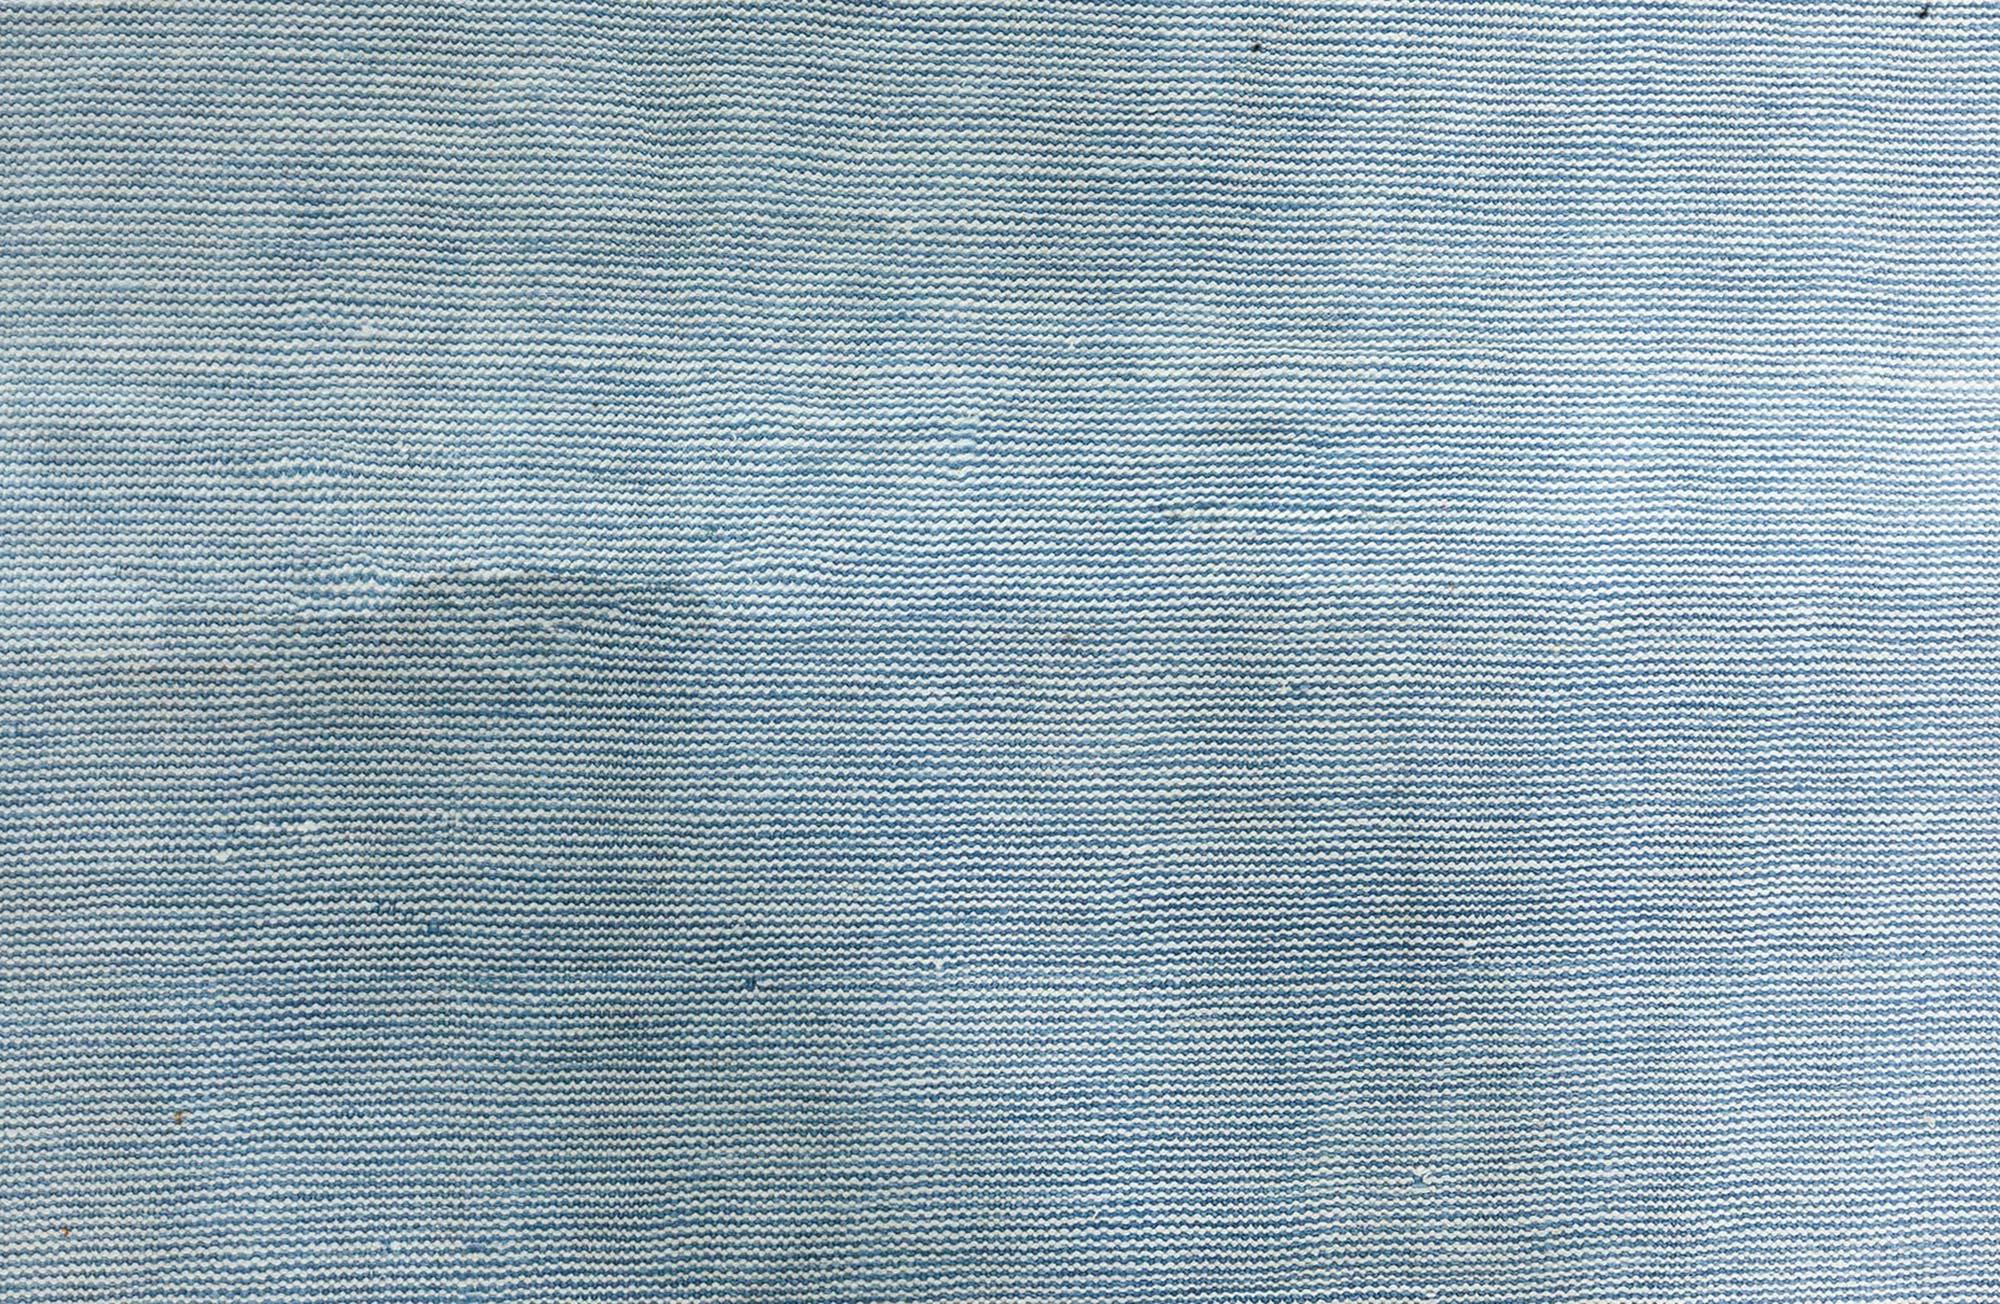 Grand tapis indien vintage Dhurrie bleu
Dimensions : 17'9